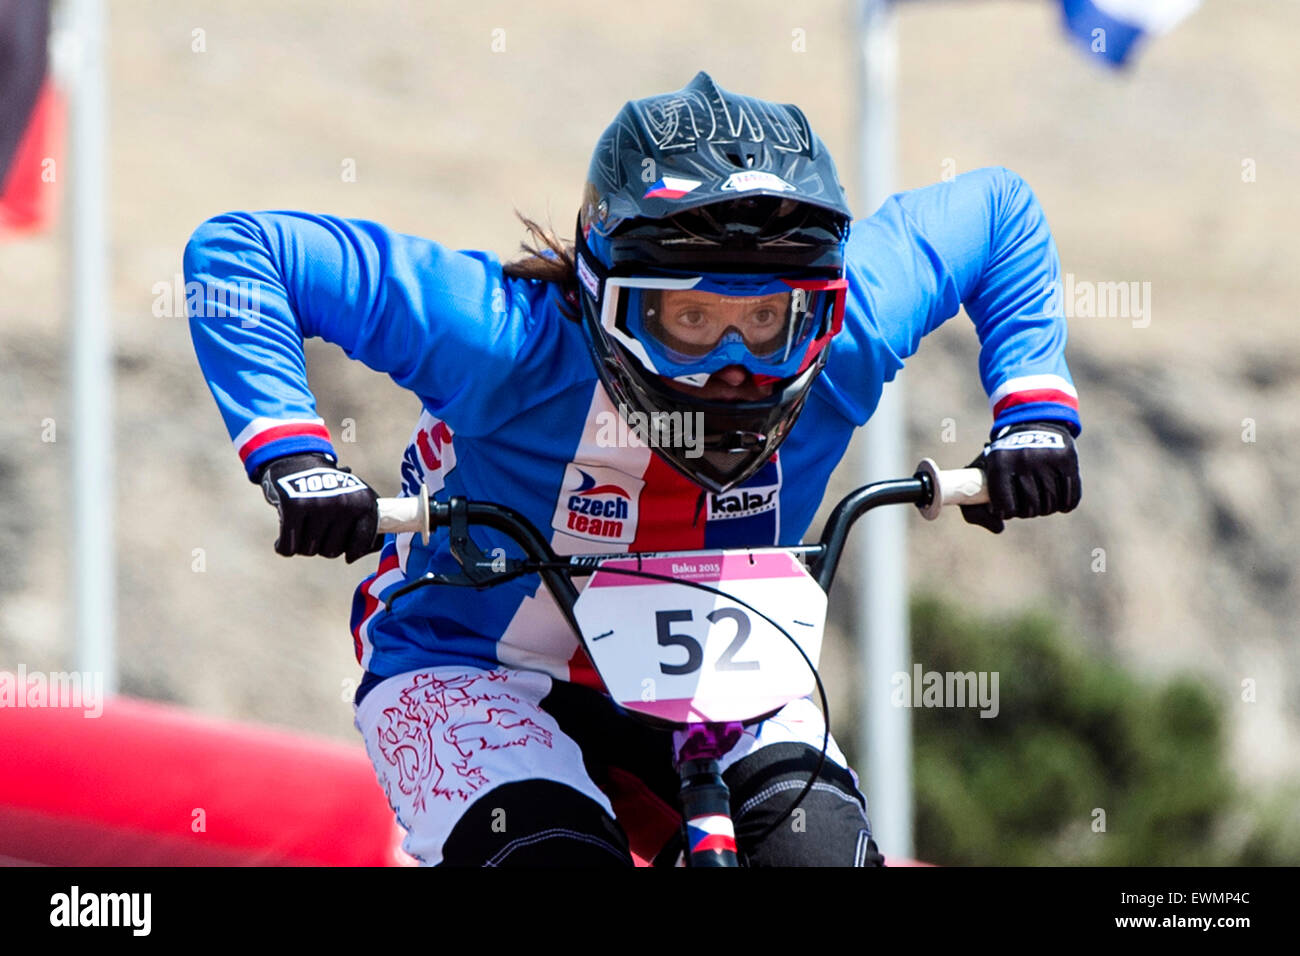 Aneta Hladikova of Czech Republic competes to win bronze medal in Women's BMX cycling at the Baku 2015 1st European Games in Baku, Azerbaijan, June 28, 2015. (CTK Photo/David Tanecek) Stock Photo